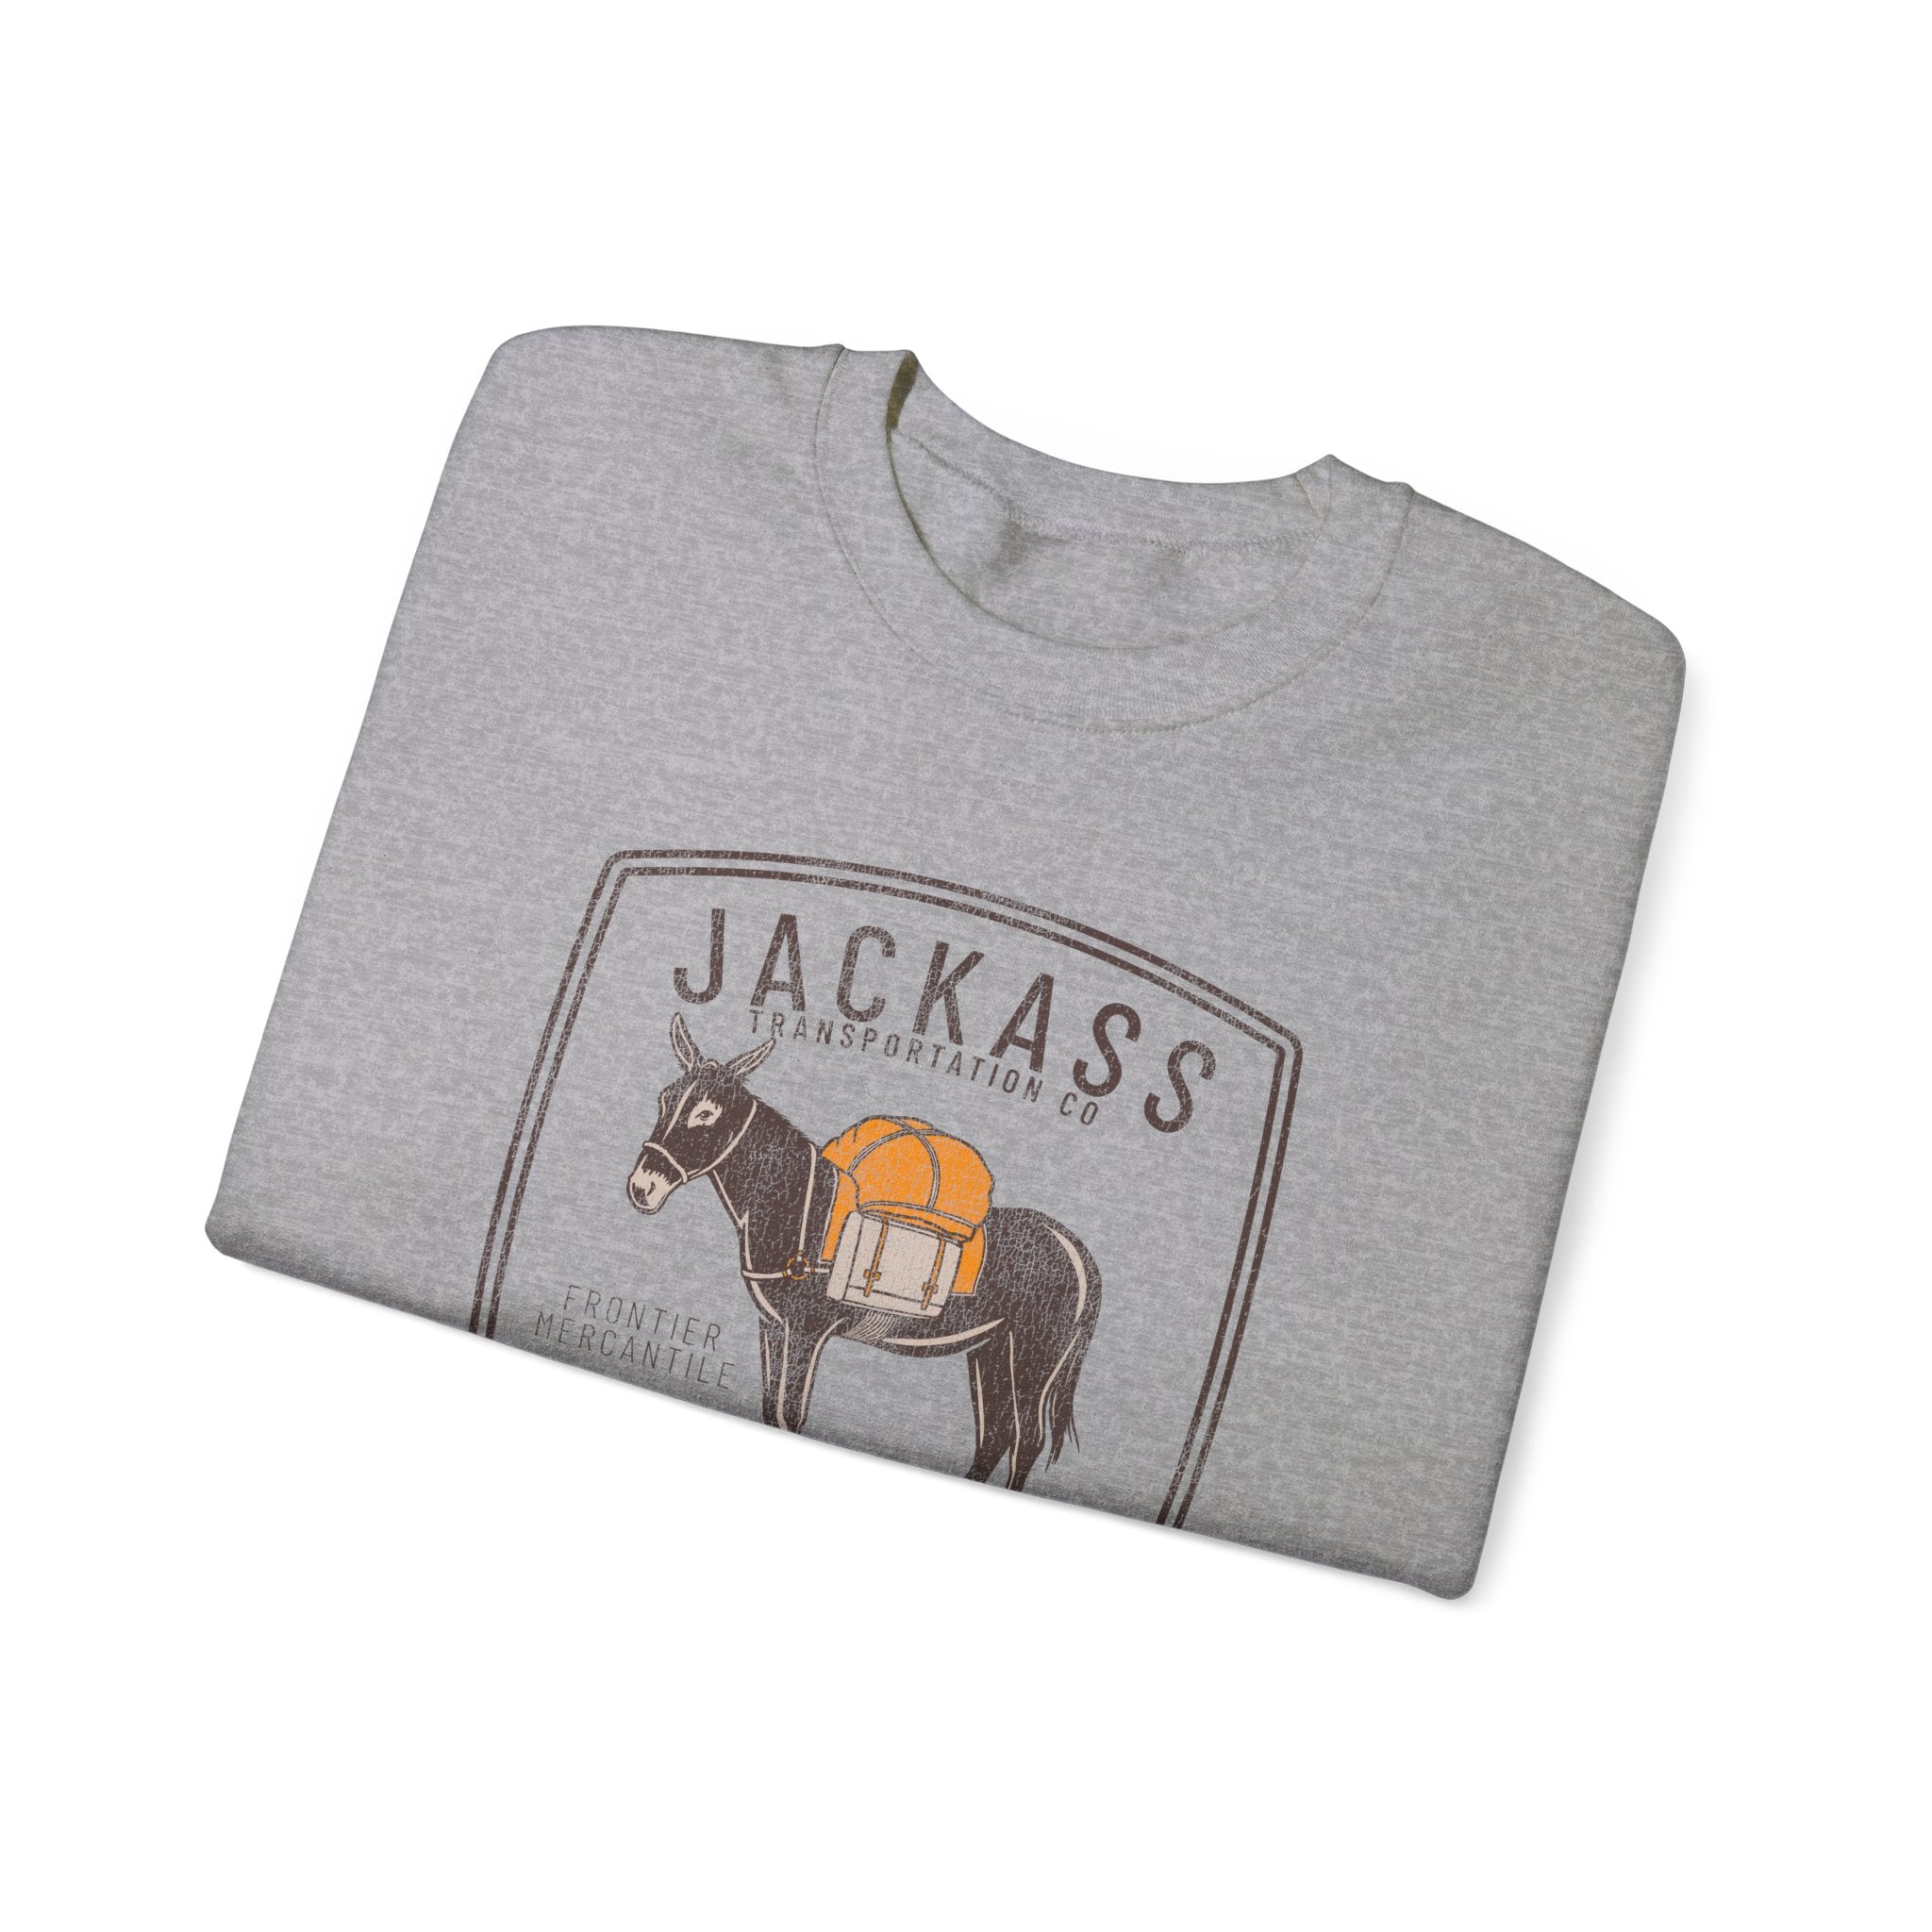 Jackass Transportation Co - Crewneck Sweatshirt